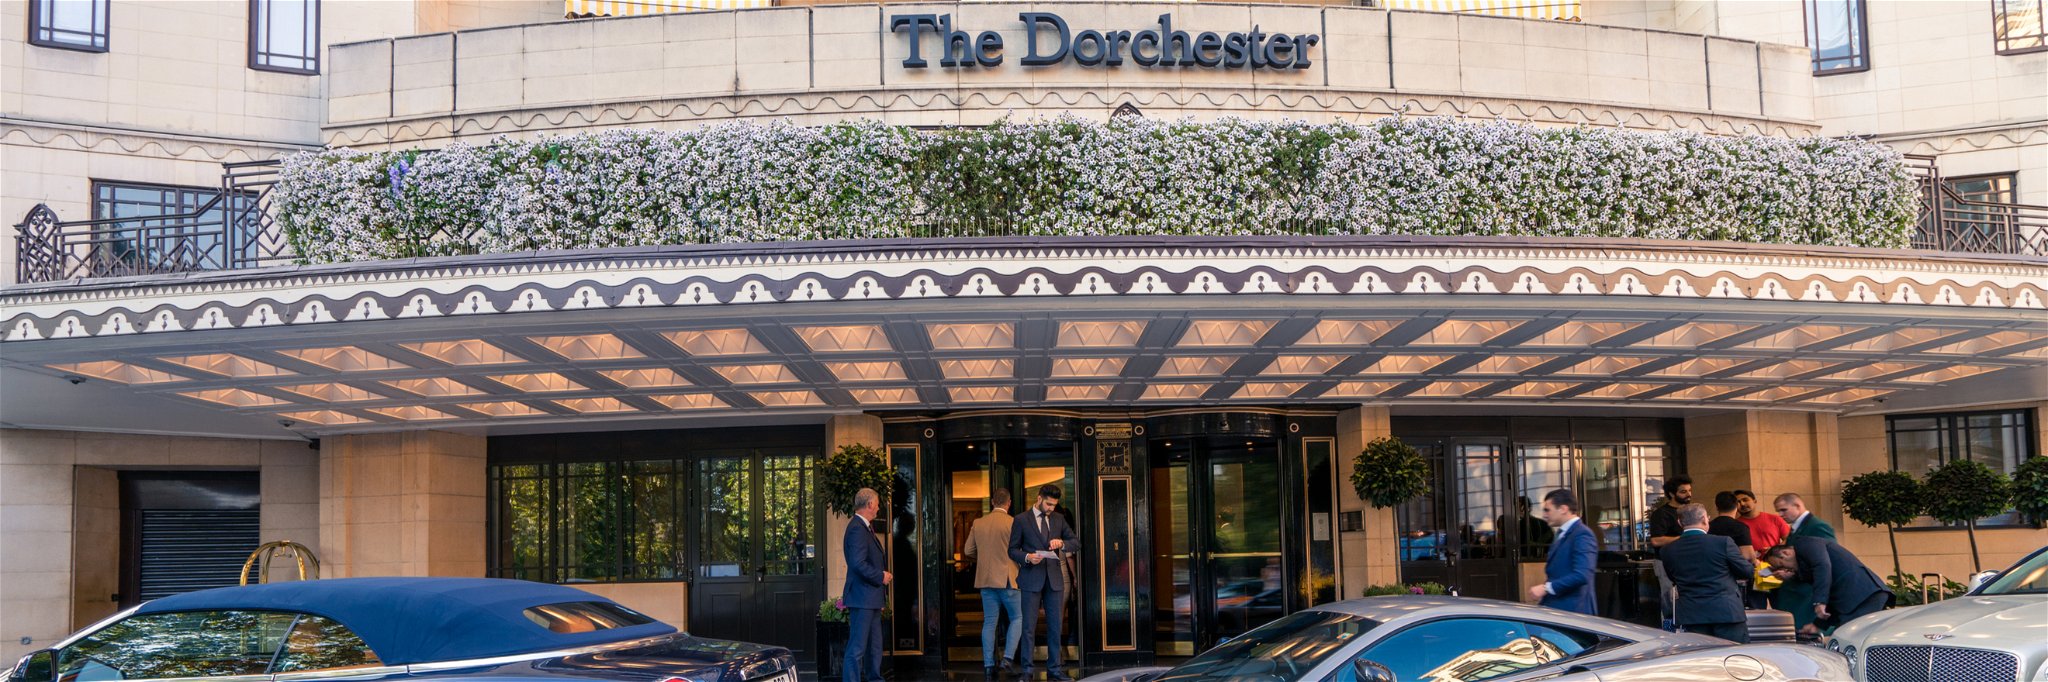 The five-star Dorchester Hotel on London's Park Lane.